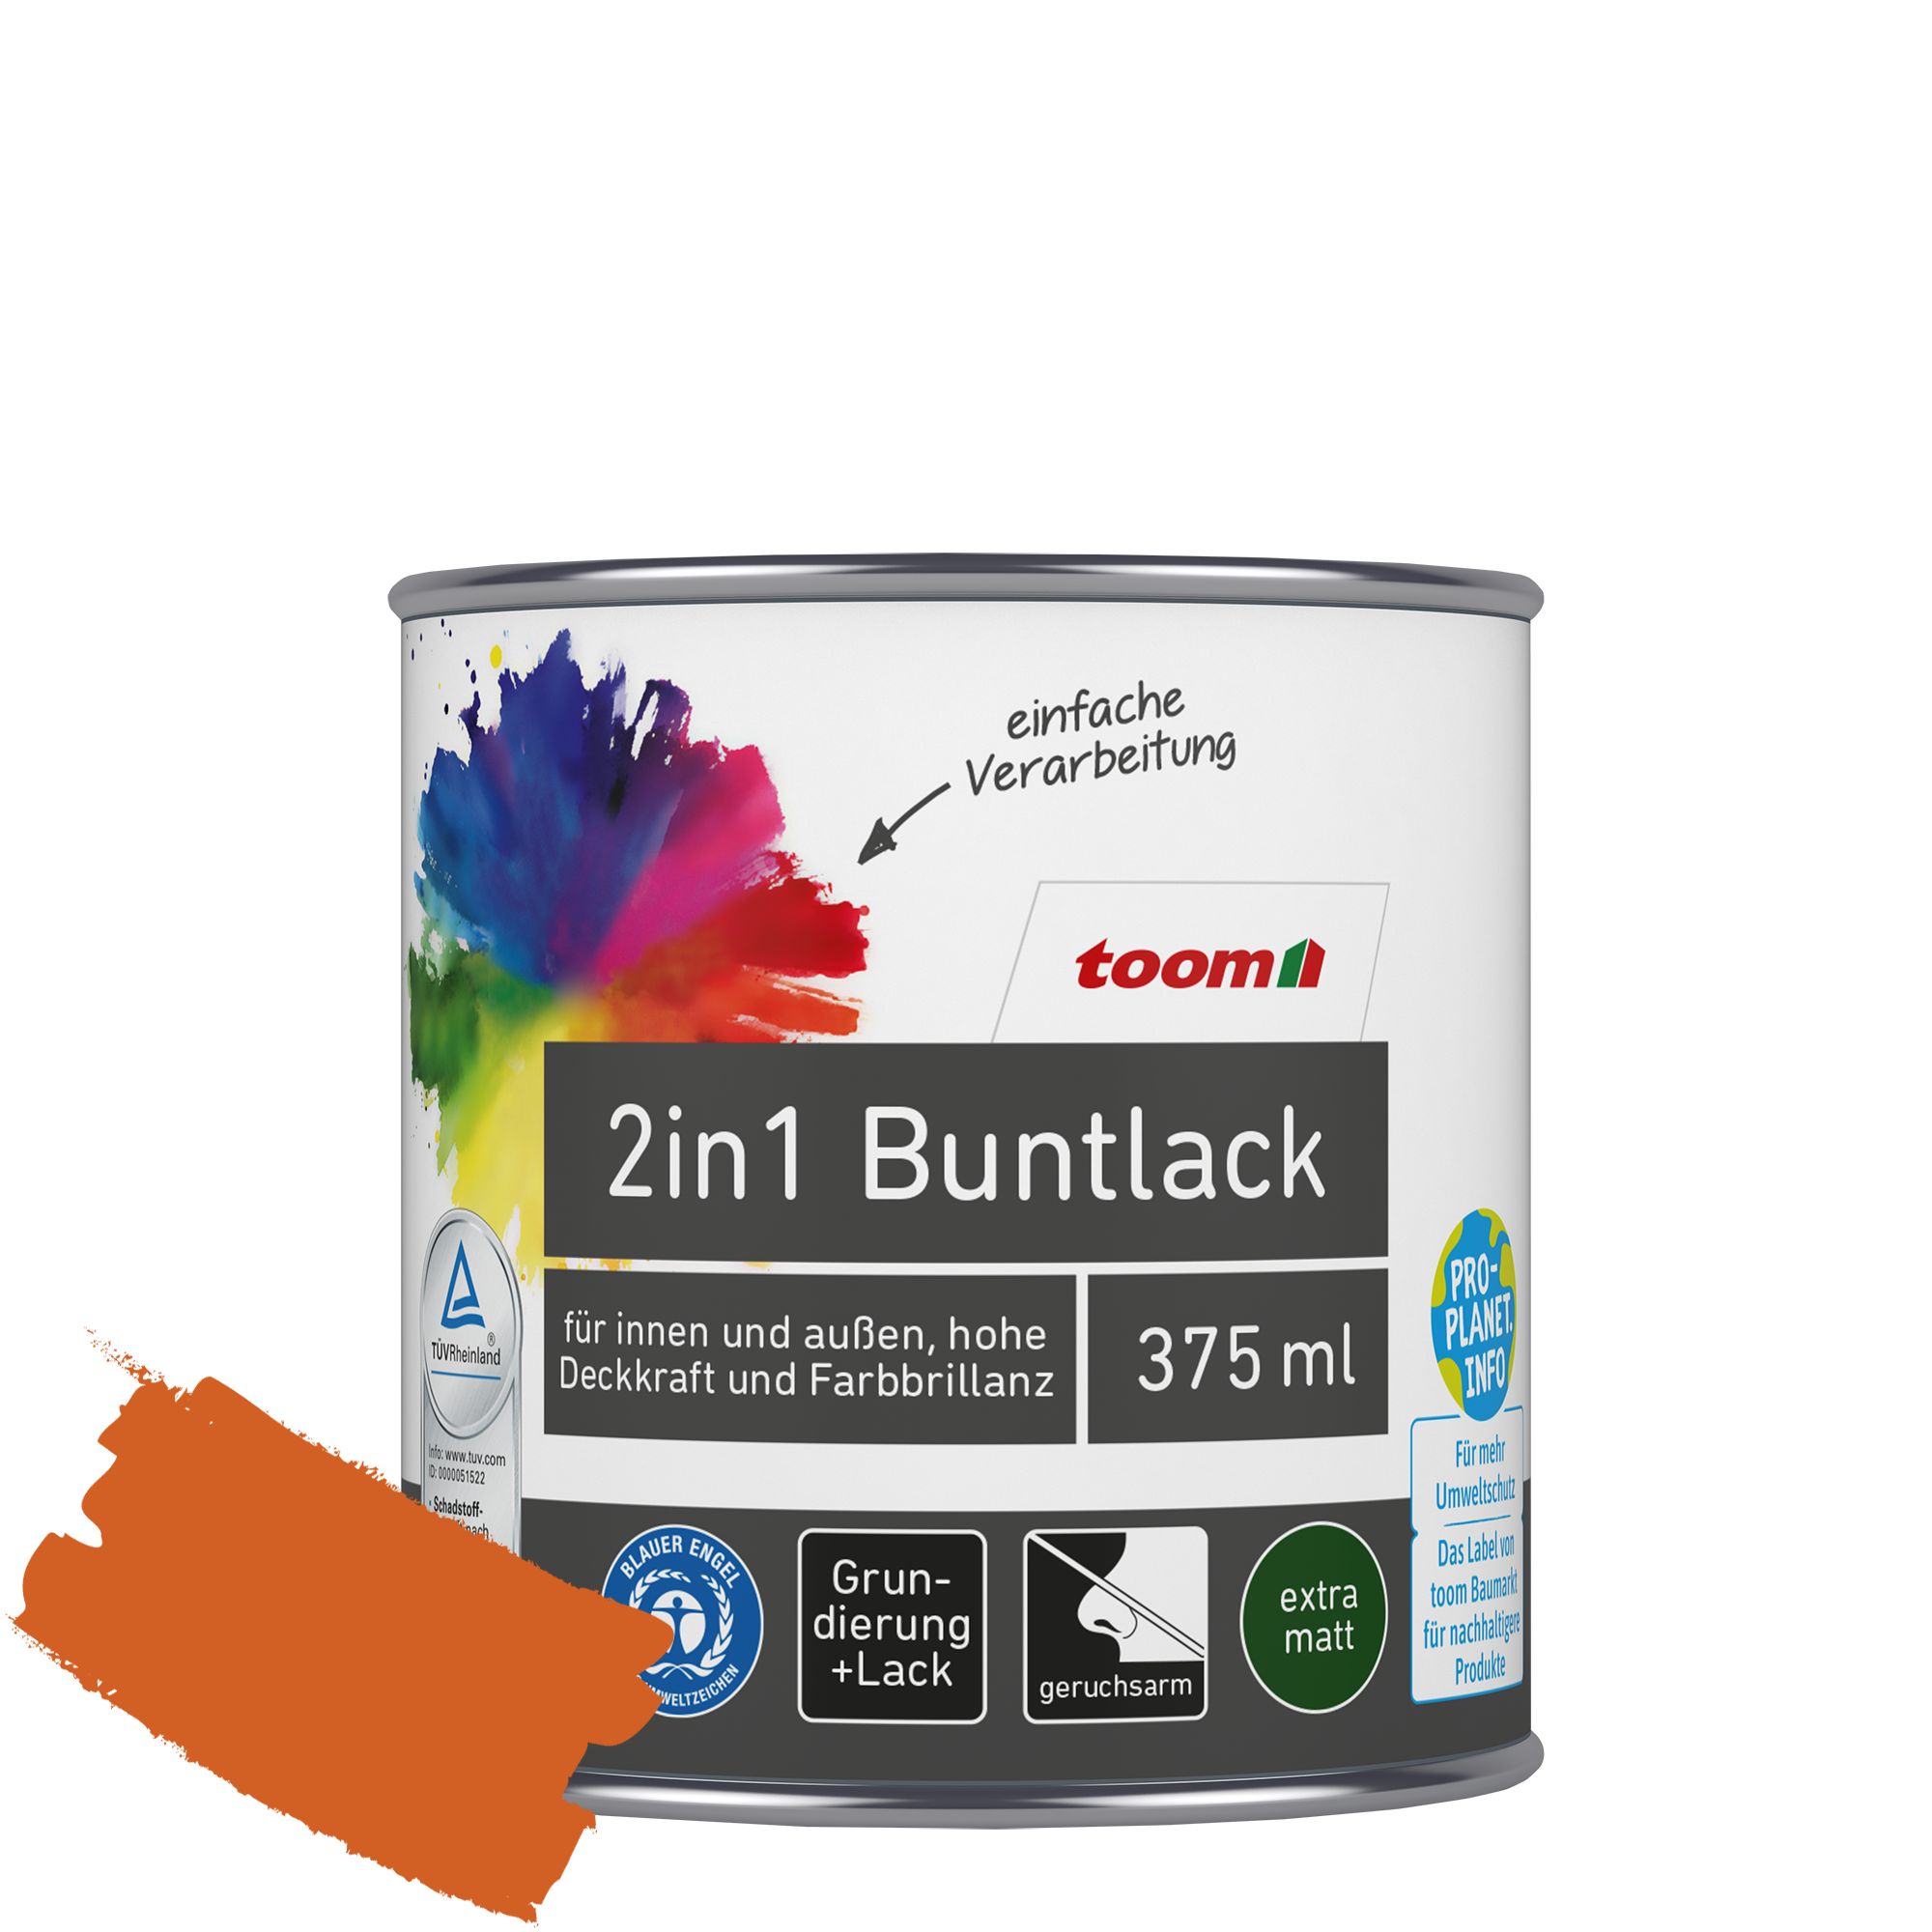 2in1 Buntlack 'Feuerglut' orange matt 375 ml + product picture